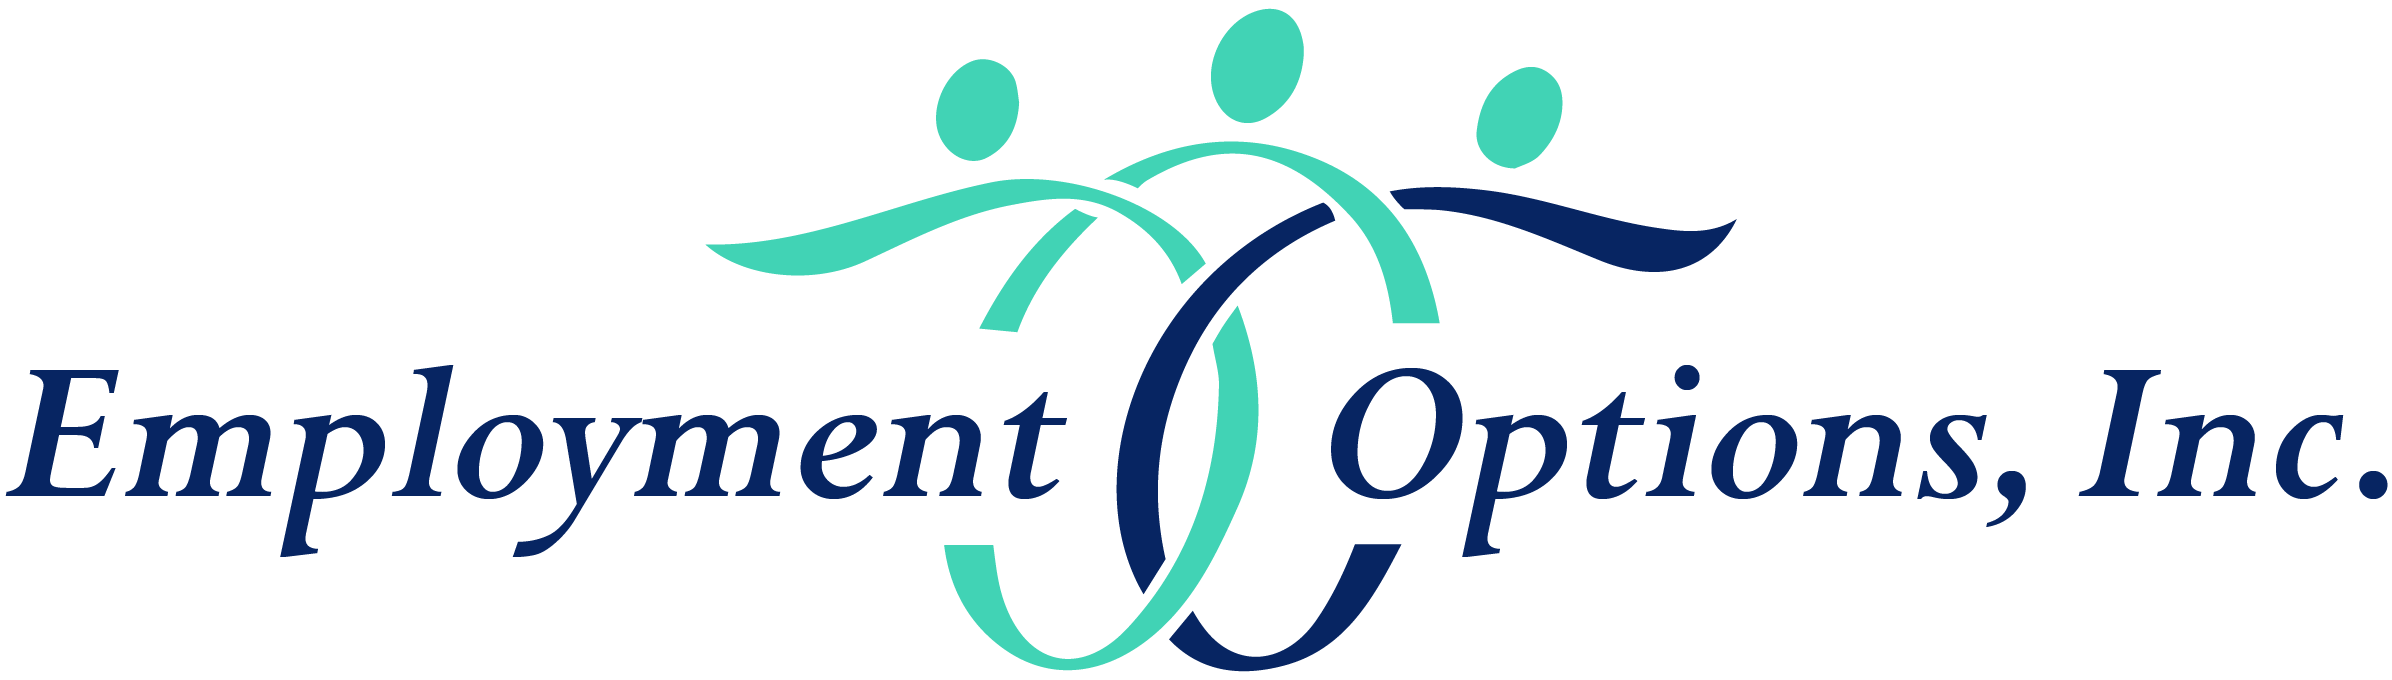 Employment Logo - Employment Options